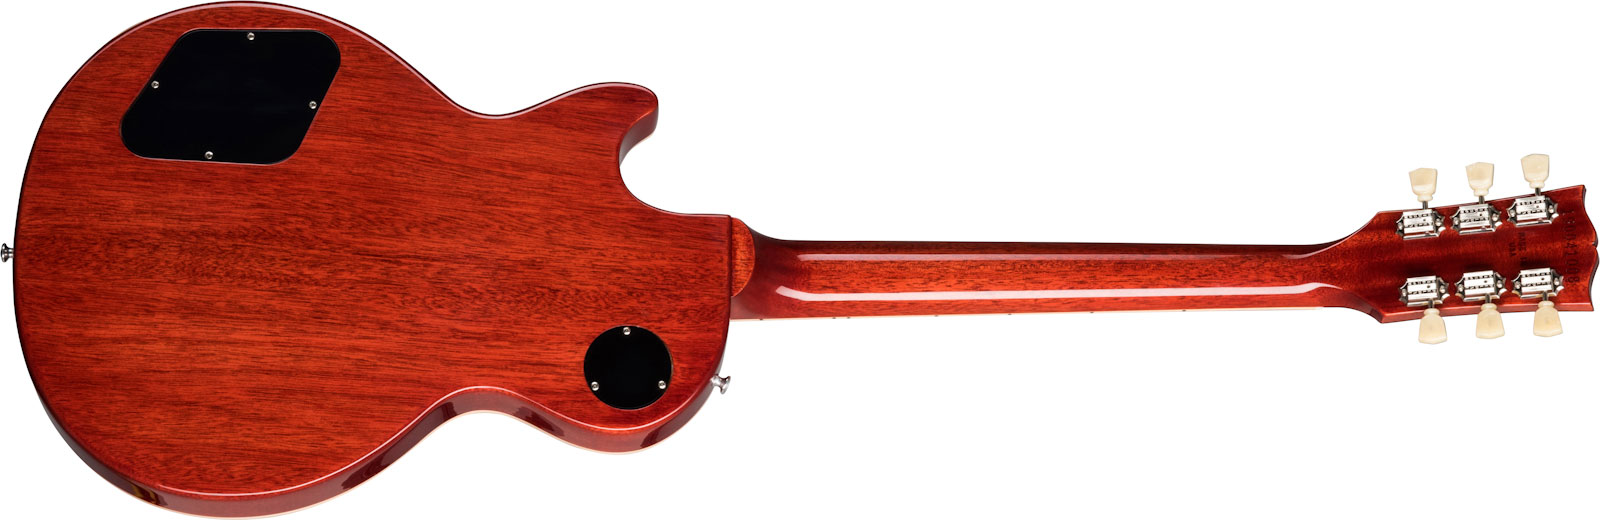 Gibson Les Paul Standard 50s 2h Ht Rw - Heritage Cherry Sunburst - Enkel gesneden elektrische gitaar - Variation 4